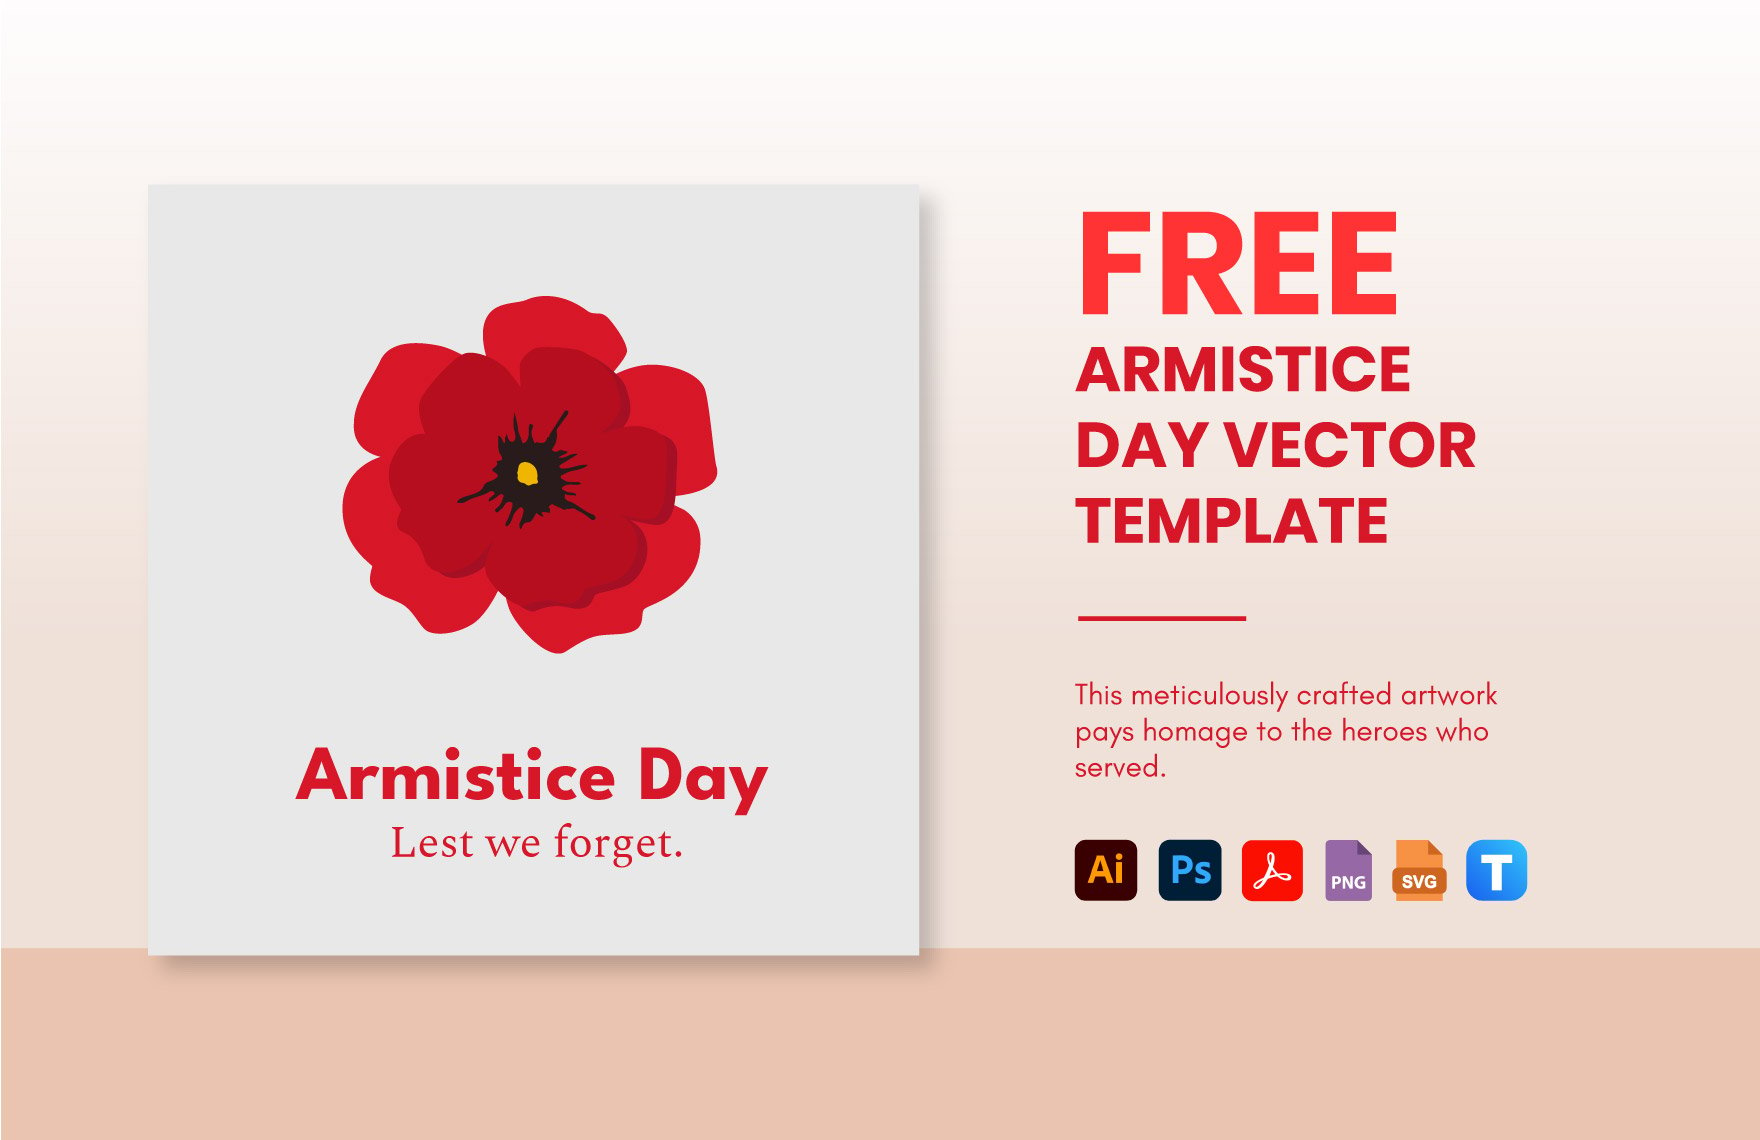 Free Armistice Day Vector in PDF, Illustrator, PSD, SVG, PNG